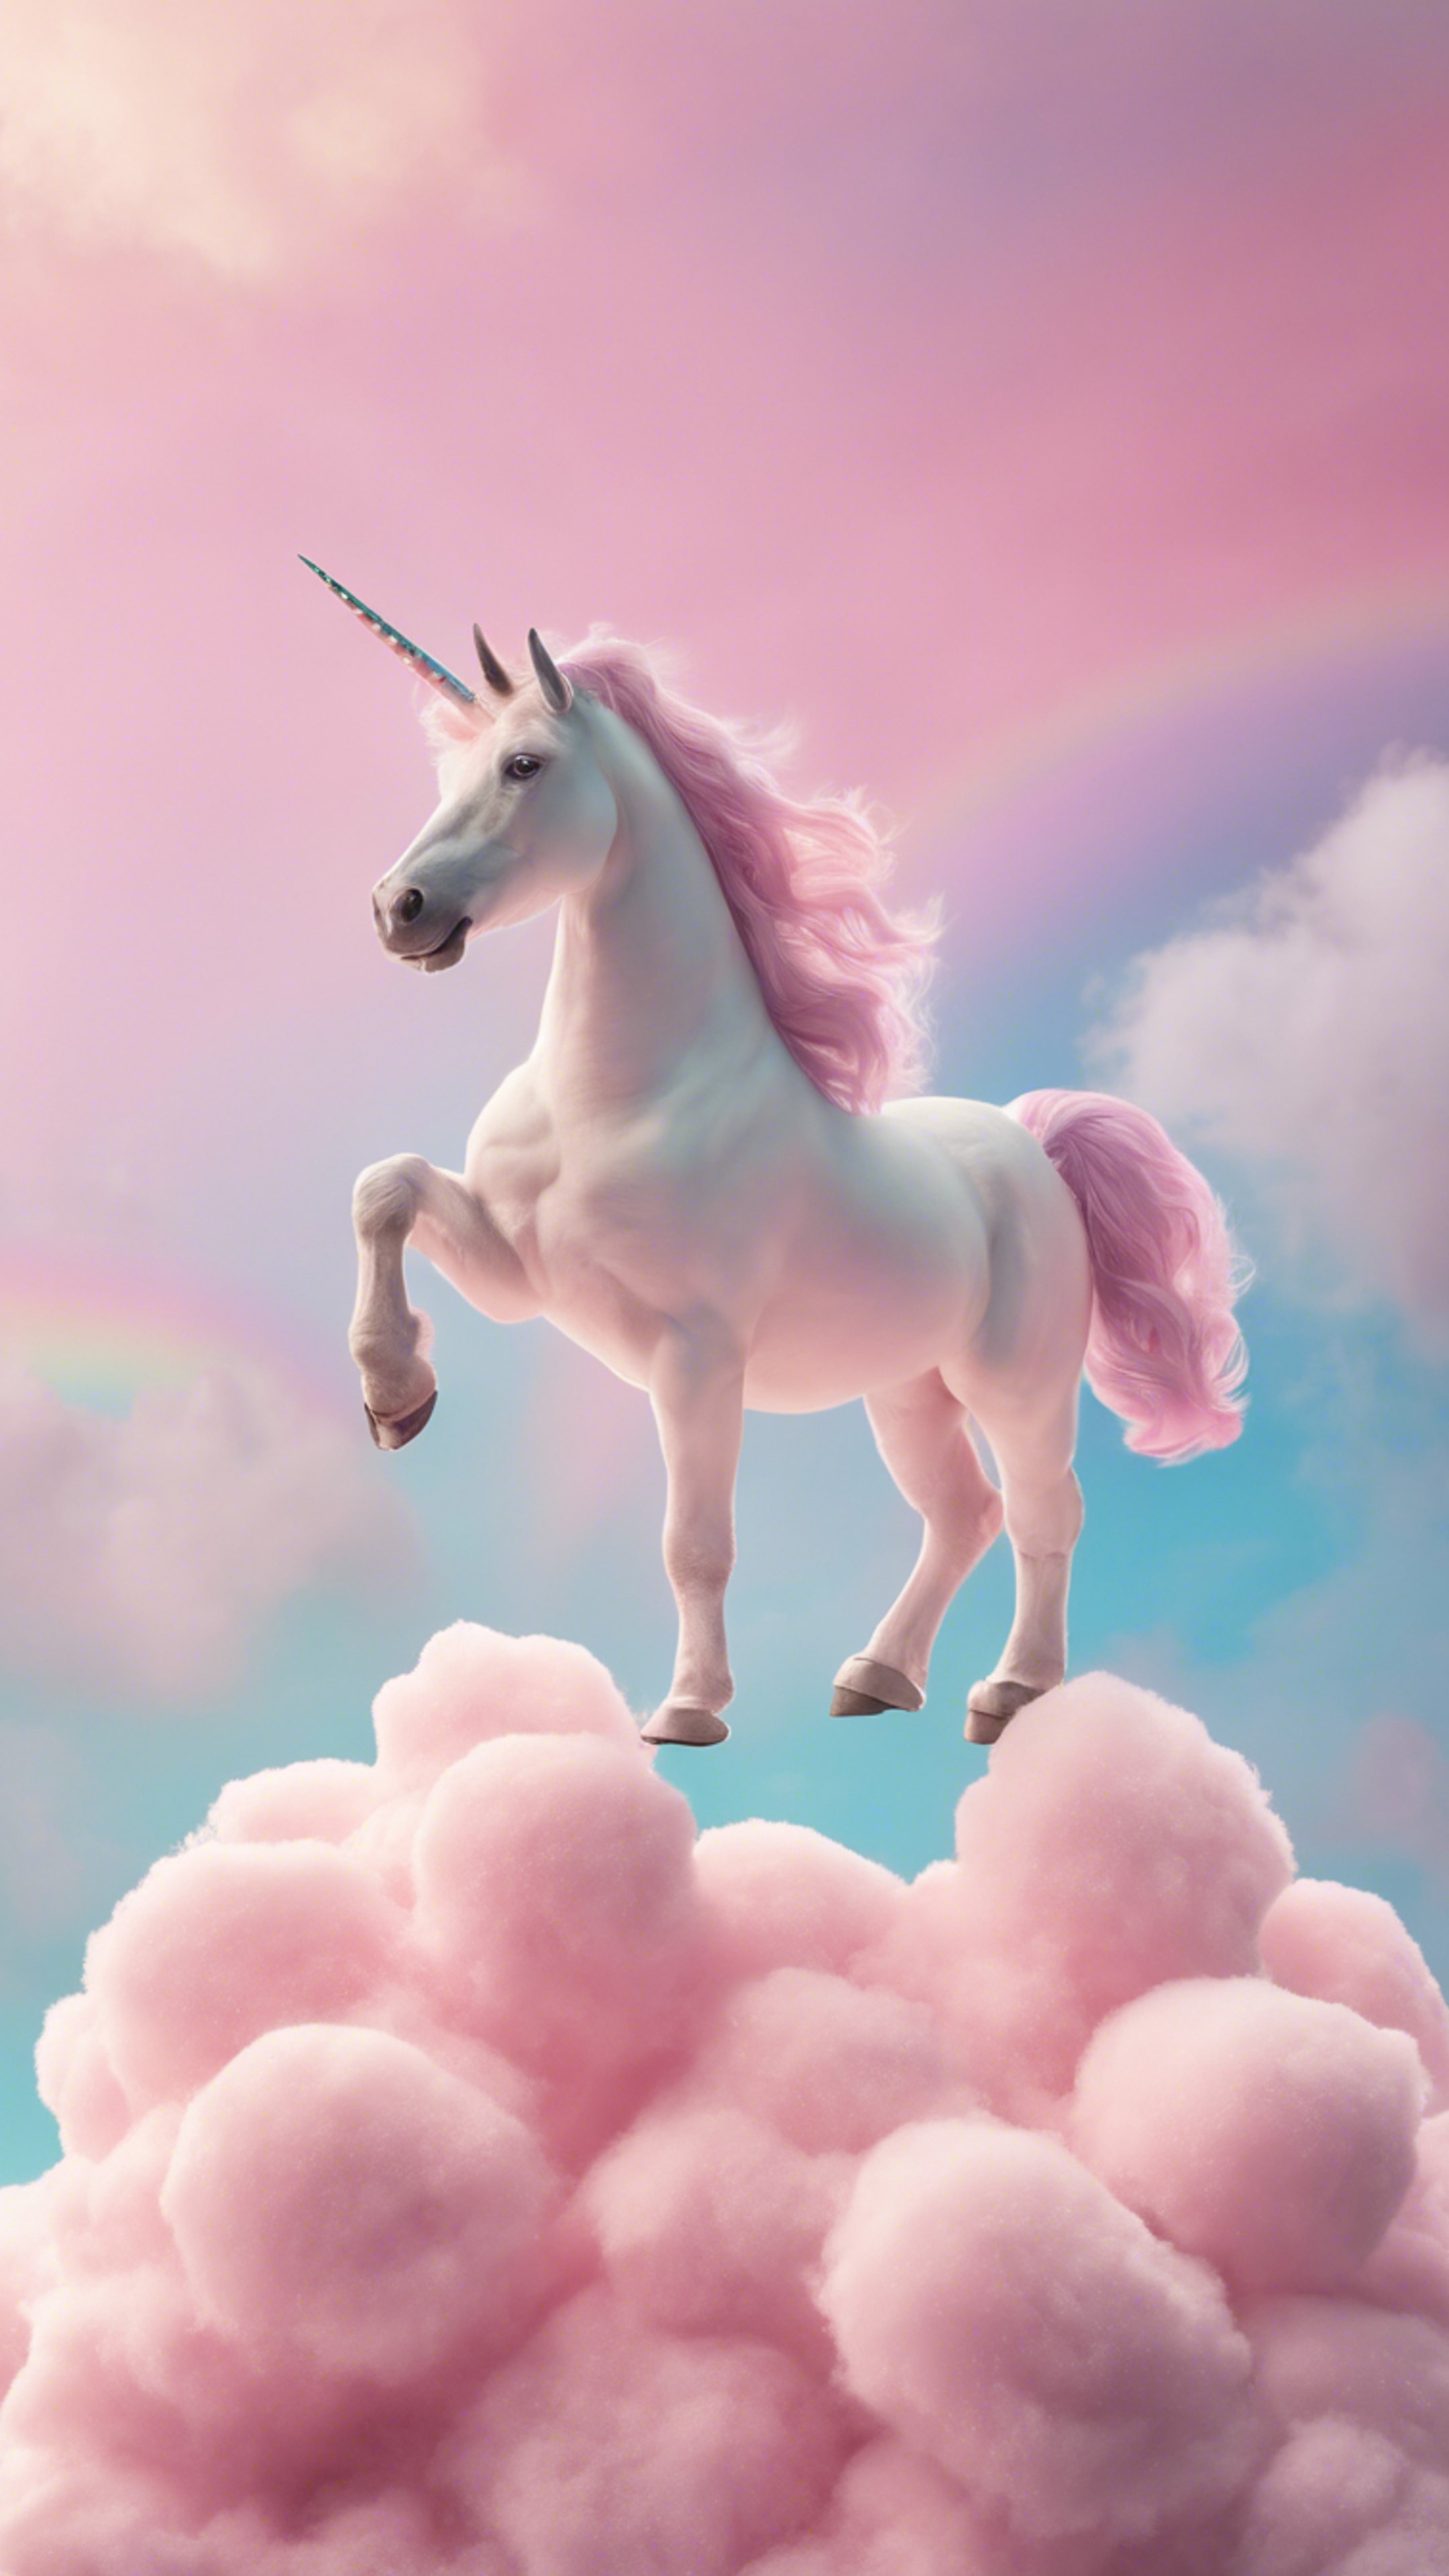 A soft, light pink, Kawaii Unicorn sitting on a pastel rainbow amidst a cotton candy cloud-filled sky.壁紙[259e72f48eaa46f08f48]